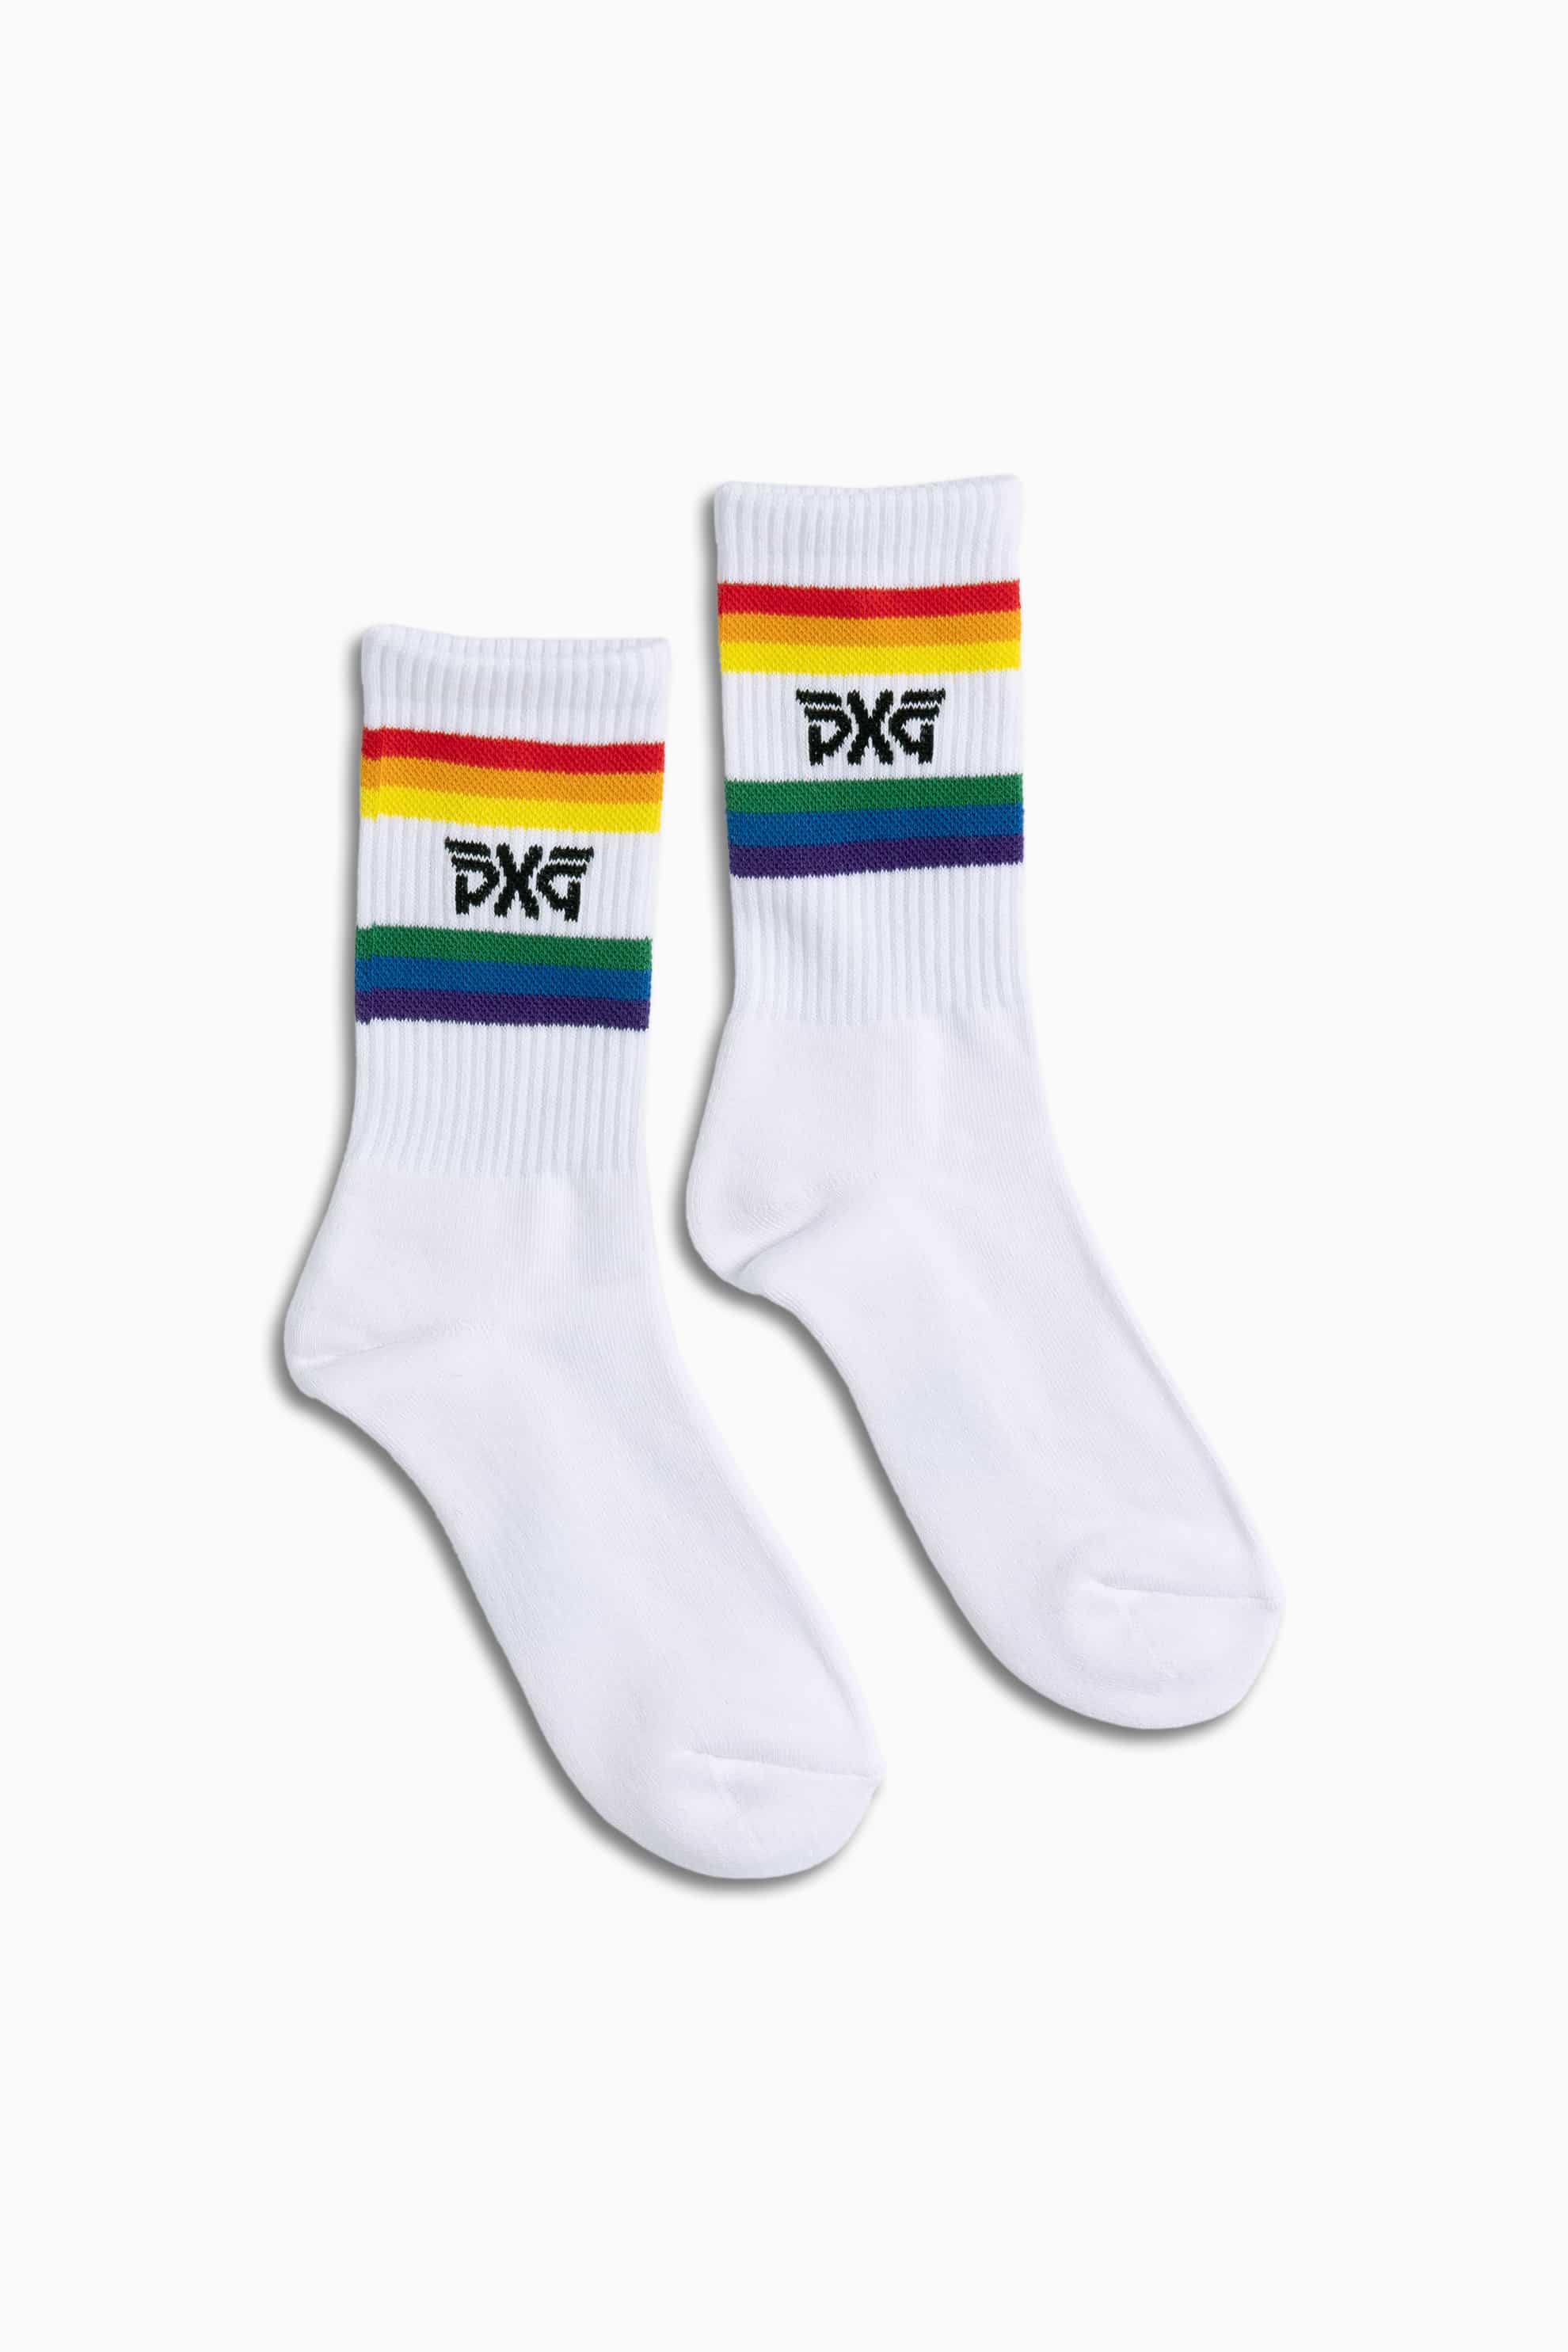 In tegenspraak boot Omtrek Buy Women's Pride Crew Socks | PXG